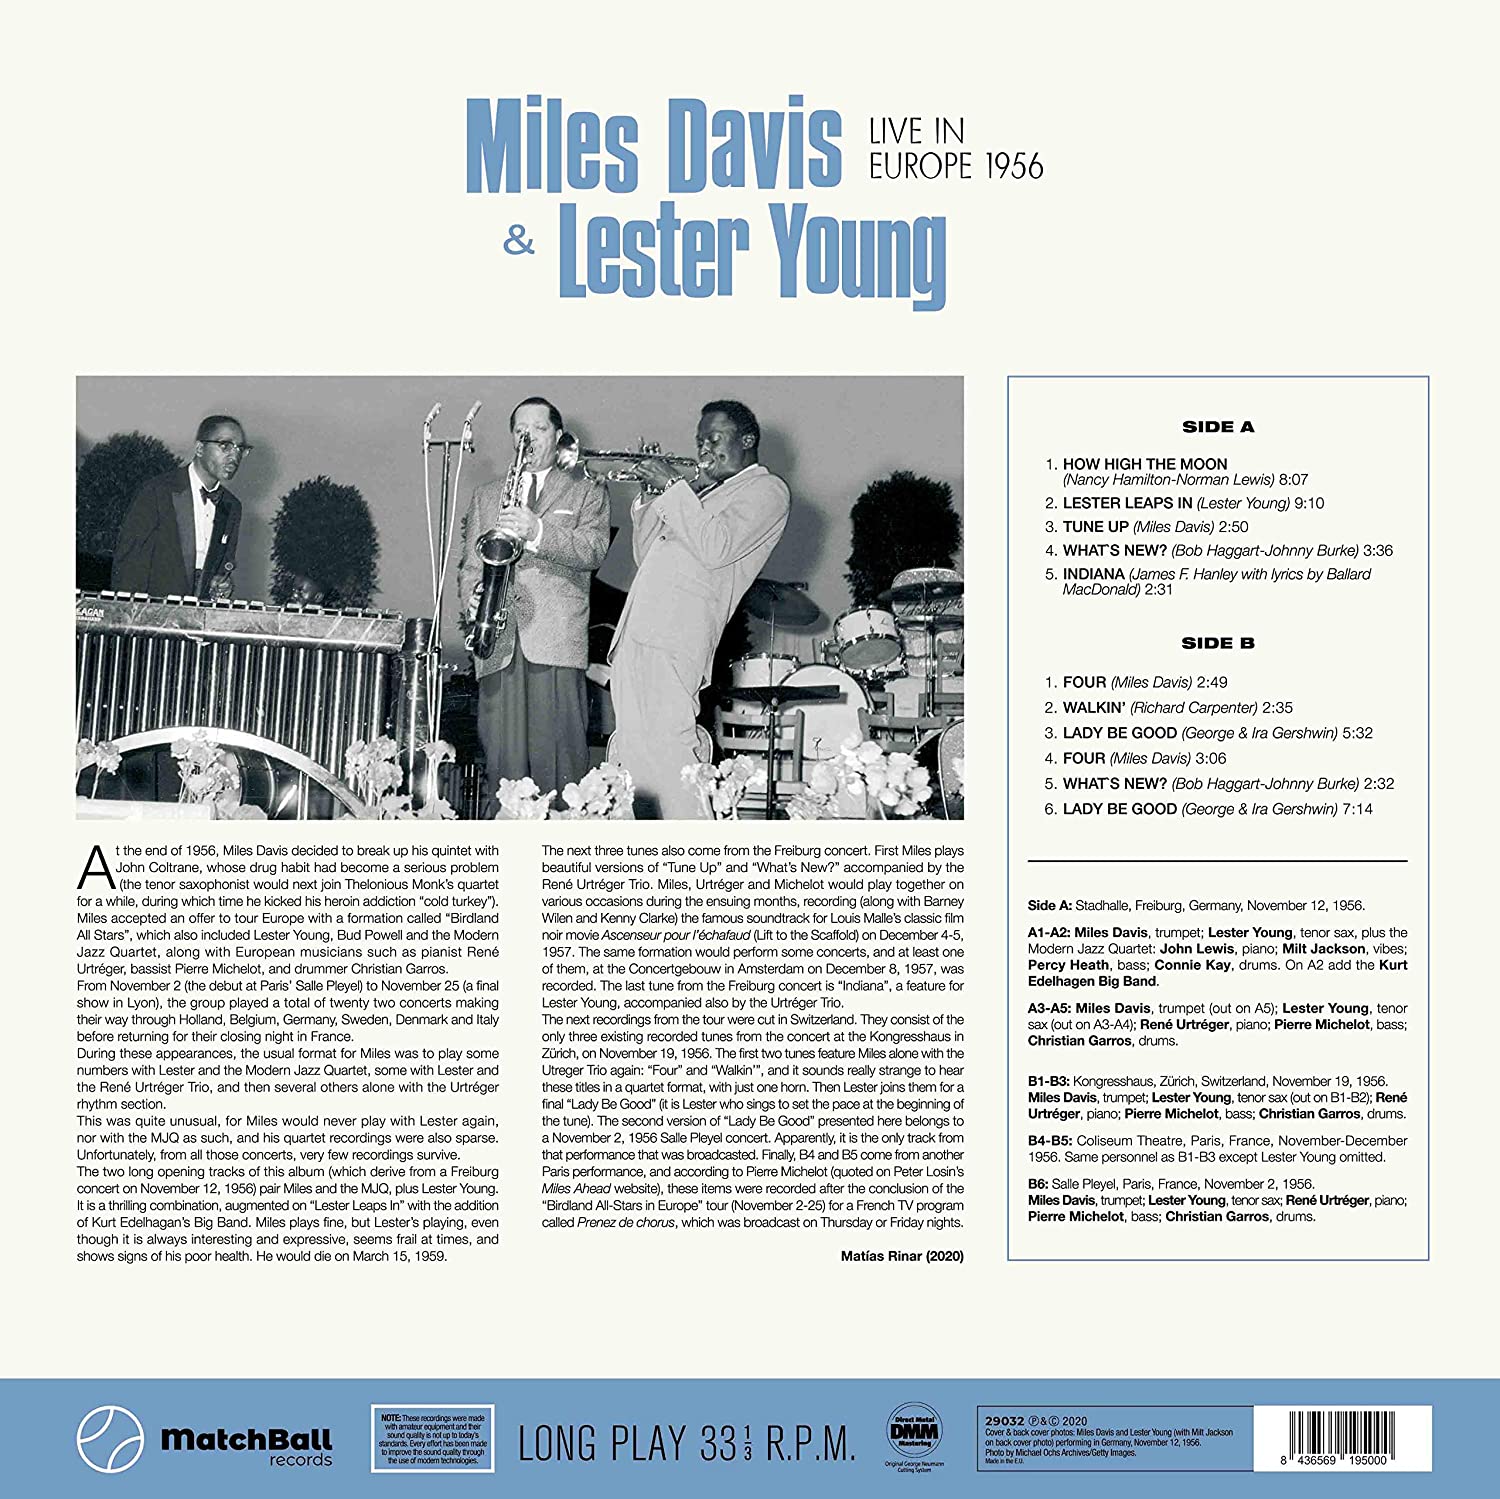 Miles Davis / Lester Young (마일즈 데이비스 / 레스터 영) - Live in Europe 1956 [LP] 